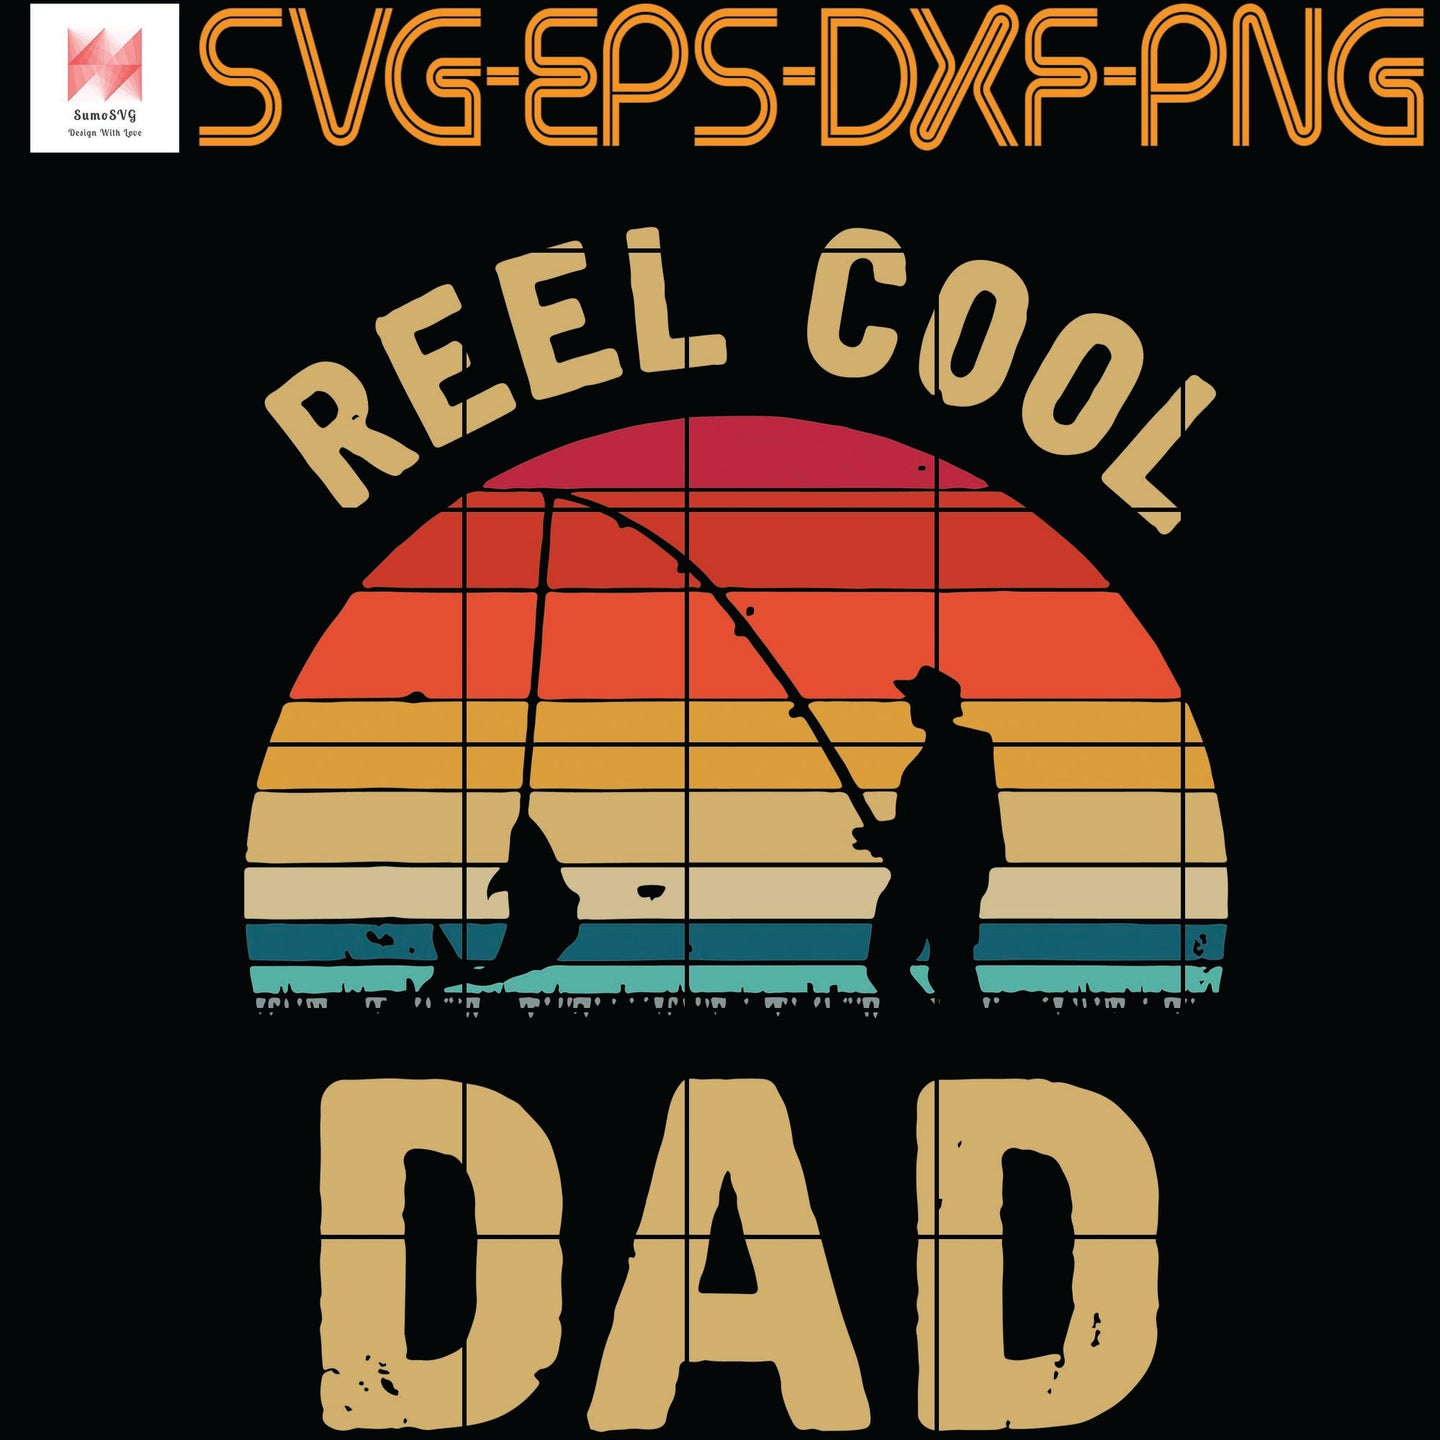 Free Free 95 Reel Cool Dad Fishing Svg SVG PNG EPS DXF File